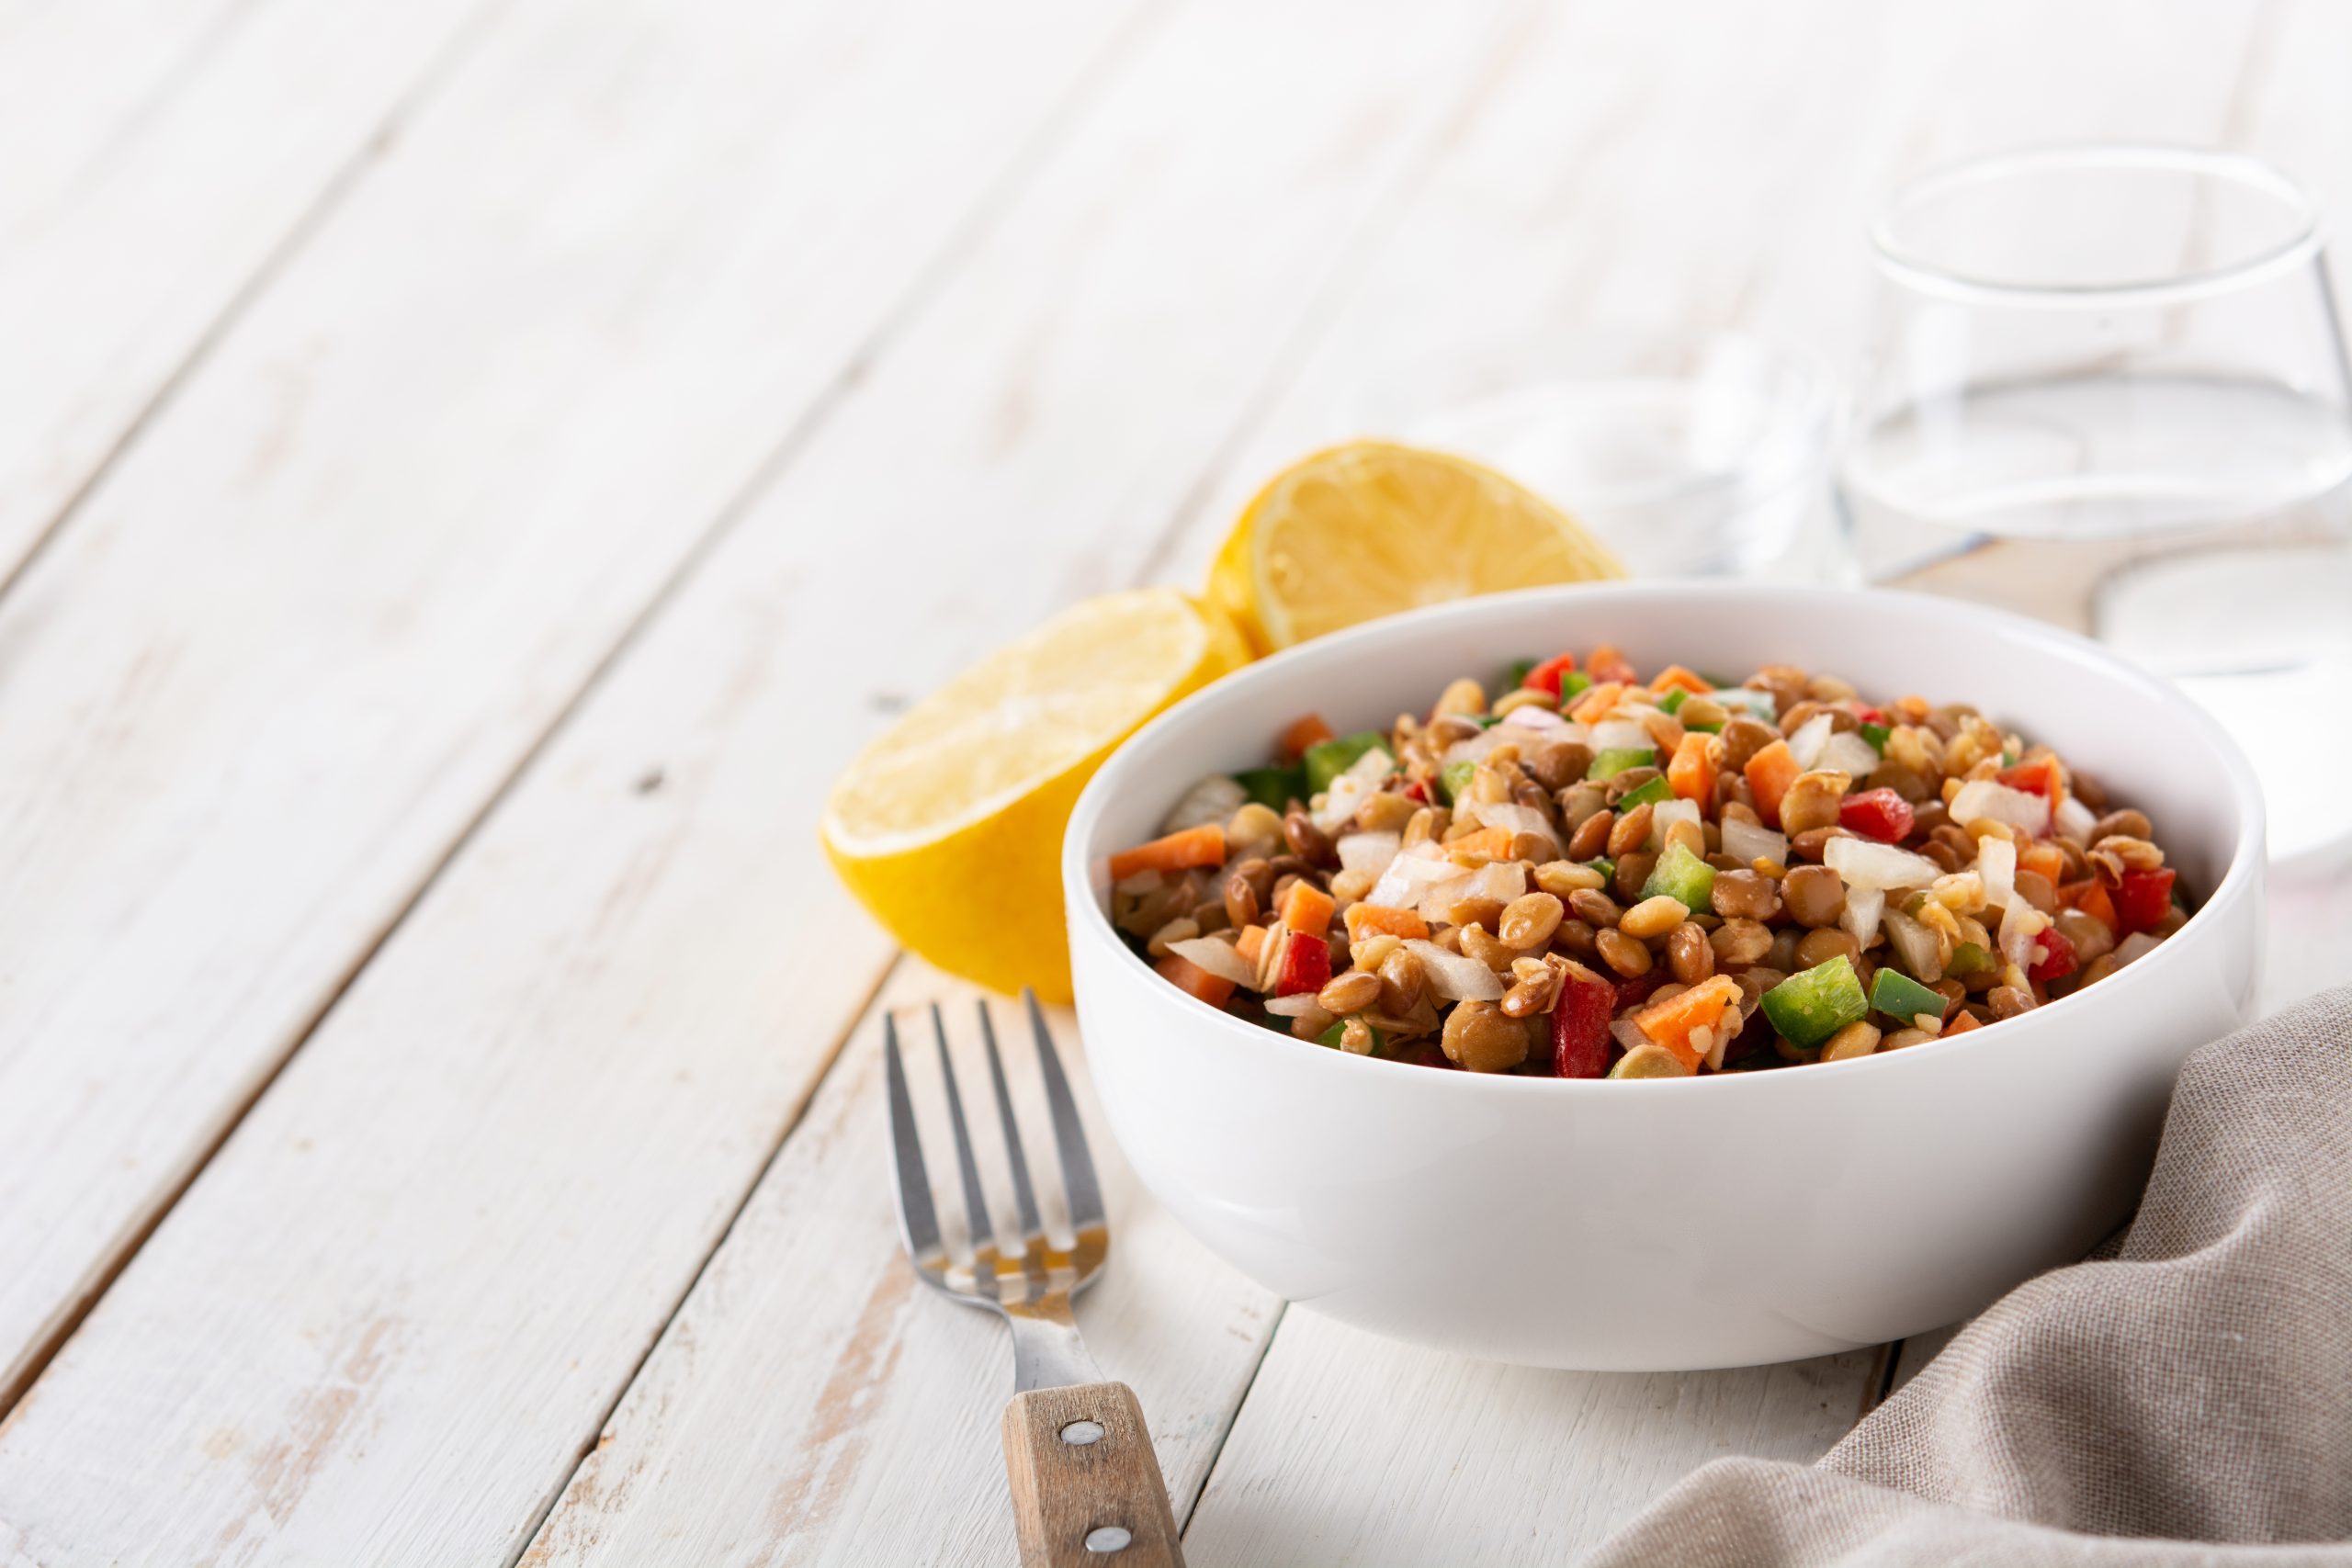 lentil salad with peppersonion carrot bowl scaled - 6+1 Καλοκαιρινές Σαλάτες Που Θες να Δοκιμάσεις!